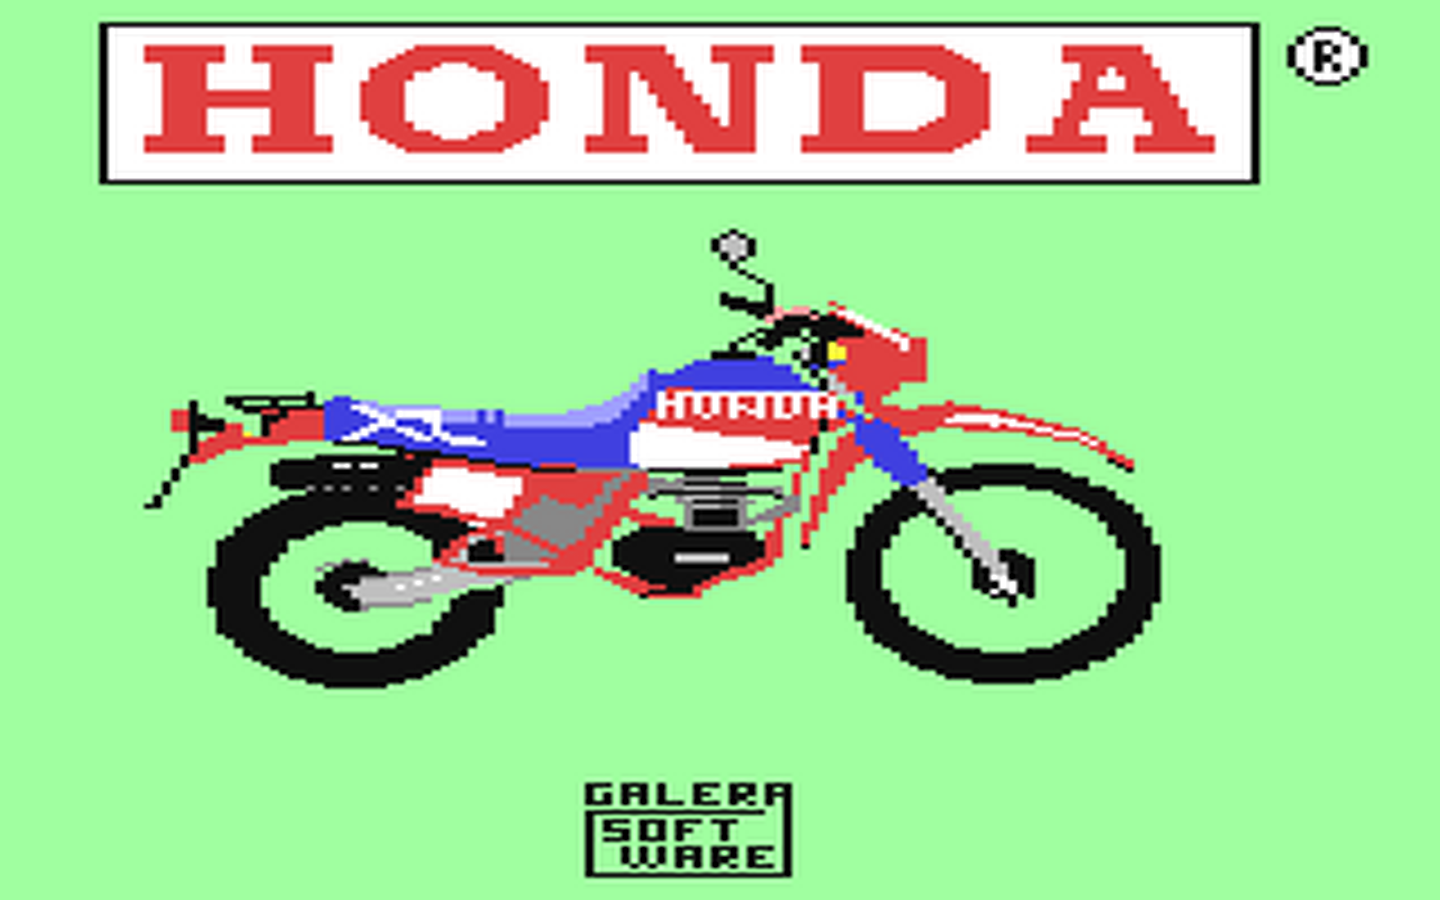 C64 GameBase Honda Systems_Editoriale_s.r.l./Commodore_(Software)_Club 1984